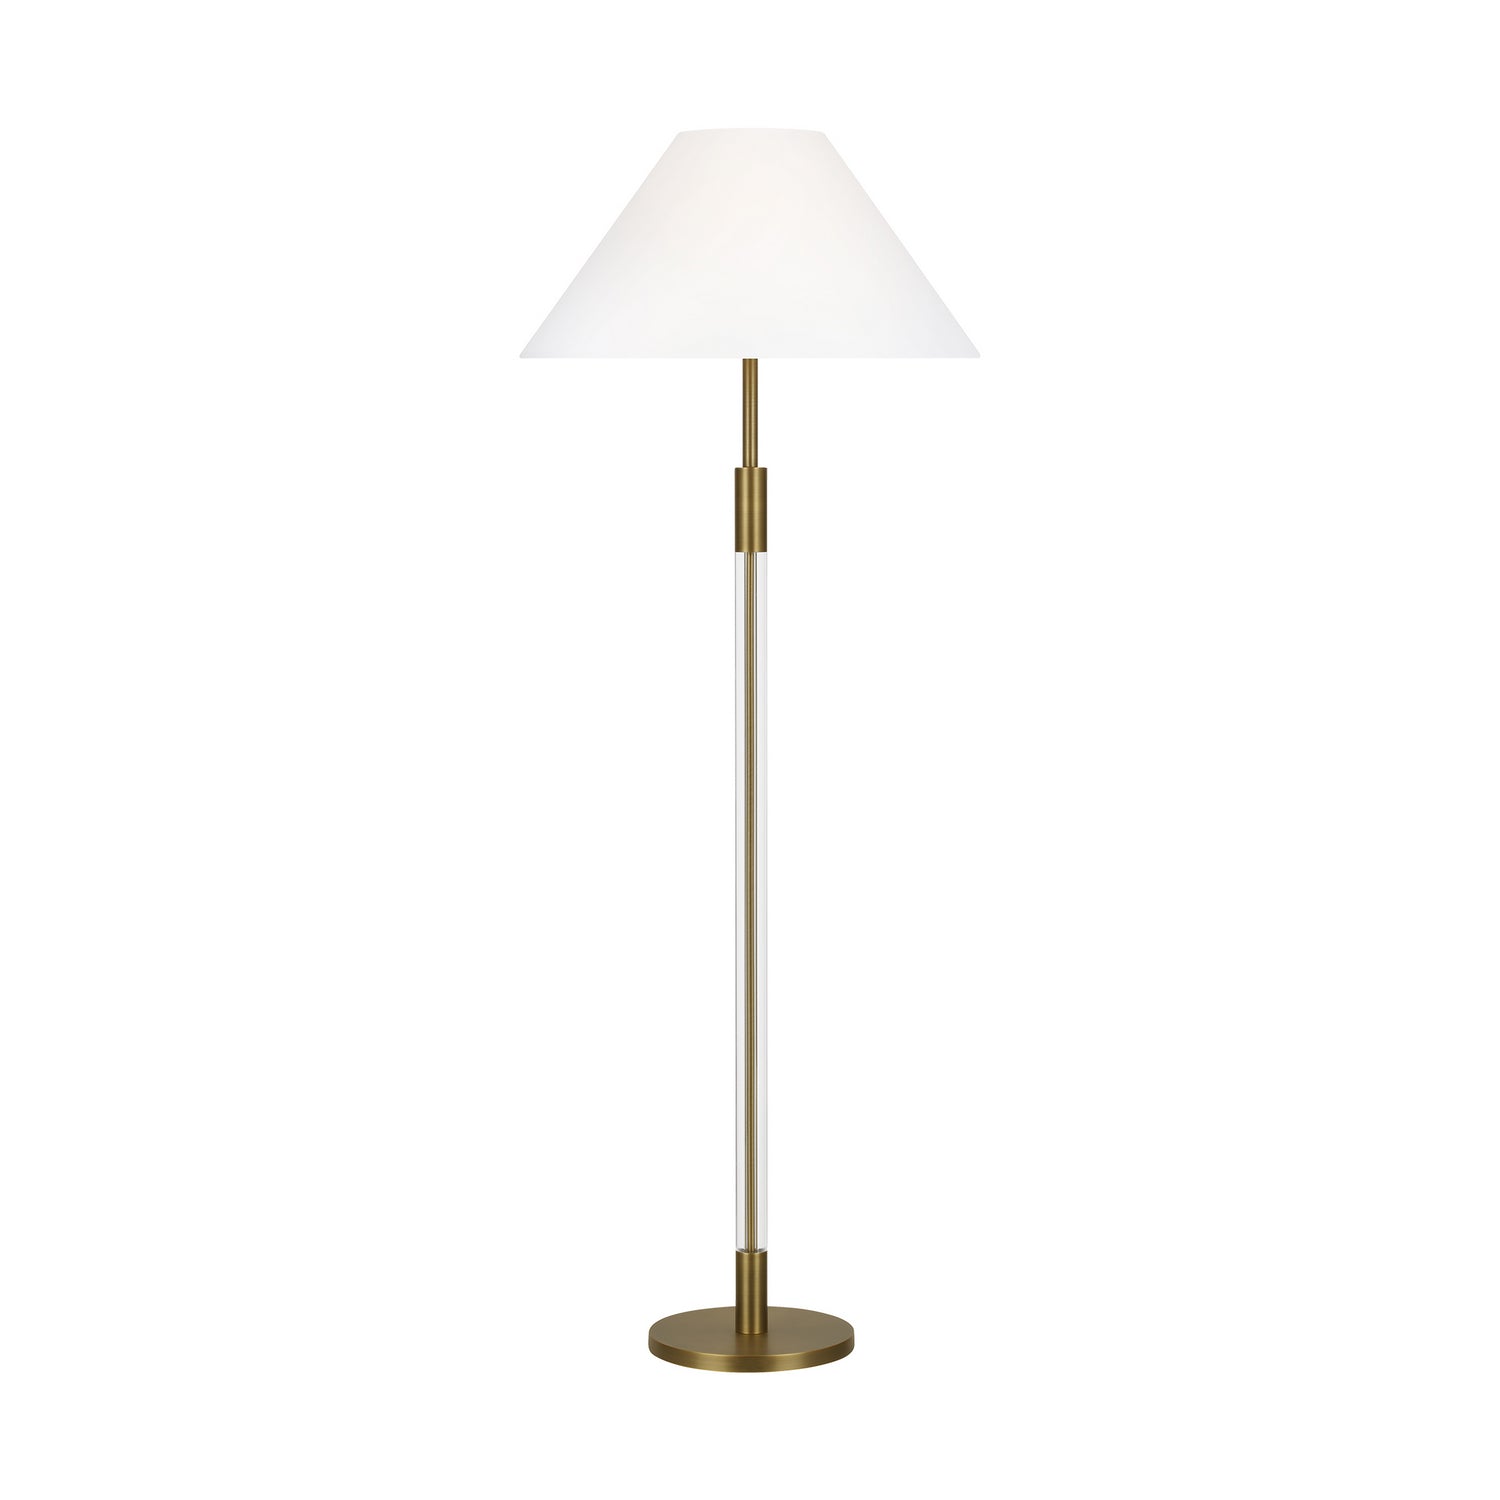 Visual Comfort Studio Canada - One Light Floor Lamp - Robert - Time Worn Brass- Union Lighting Luminaires Decor